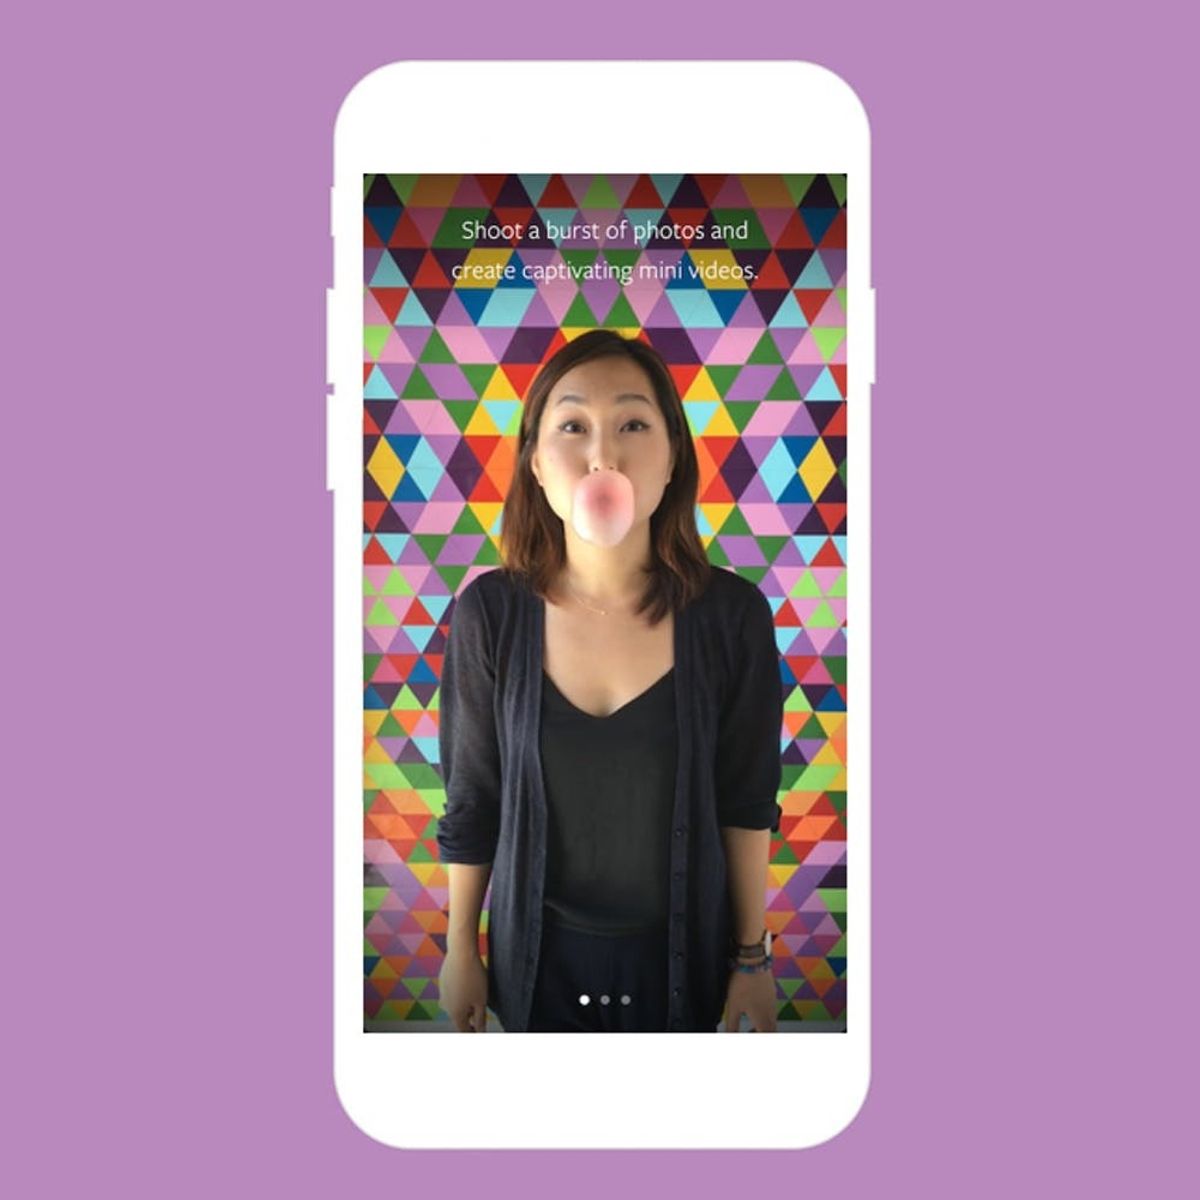 Instagram’s New App Will Make Your Posts Infinitely Cooler